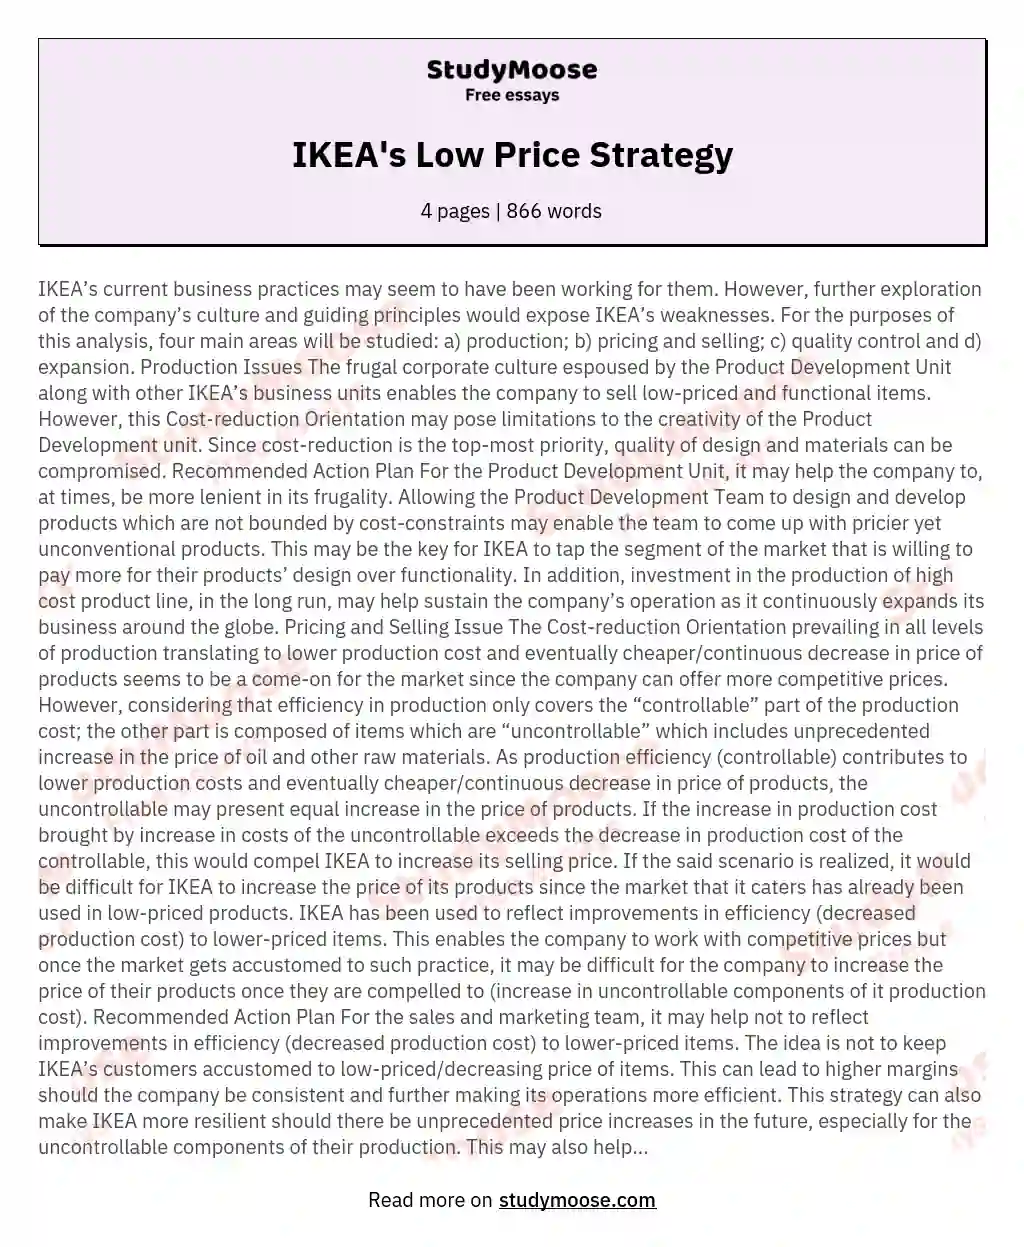 IKEA's Low Price Strategy